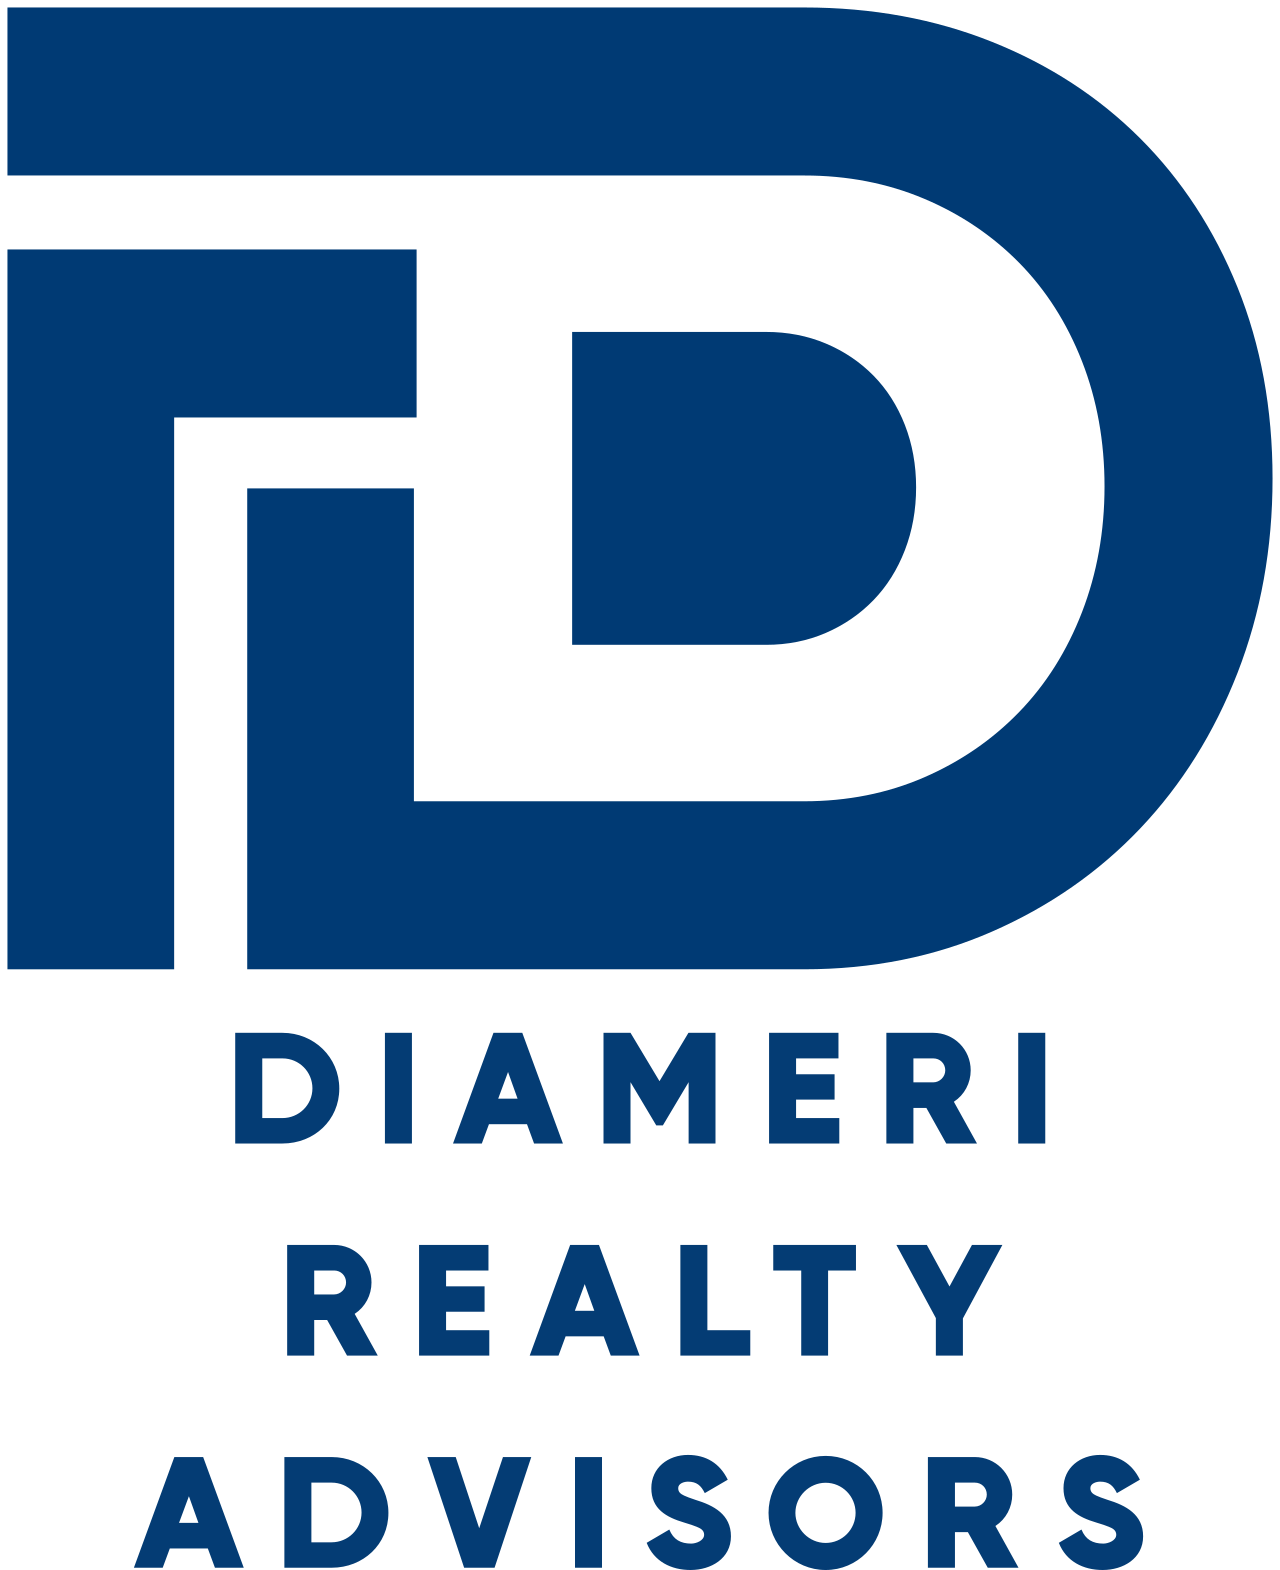 Diameri
realty
advisors's logo